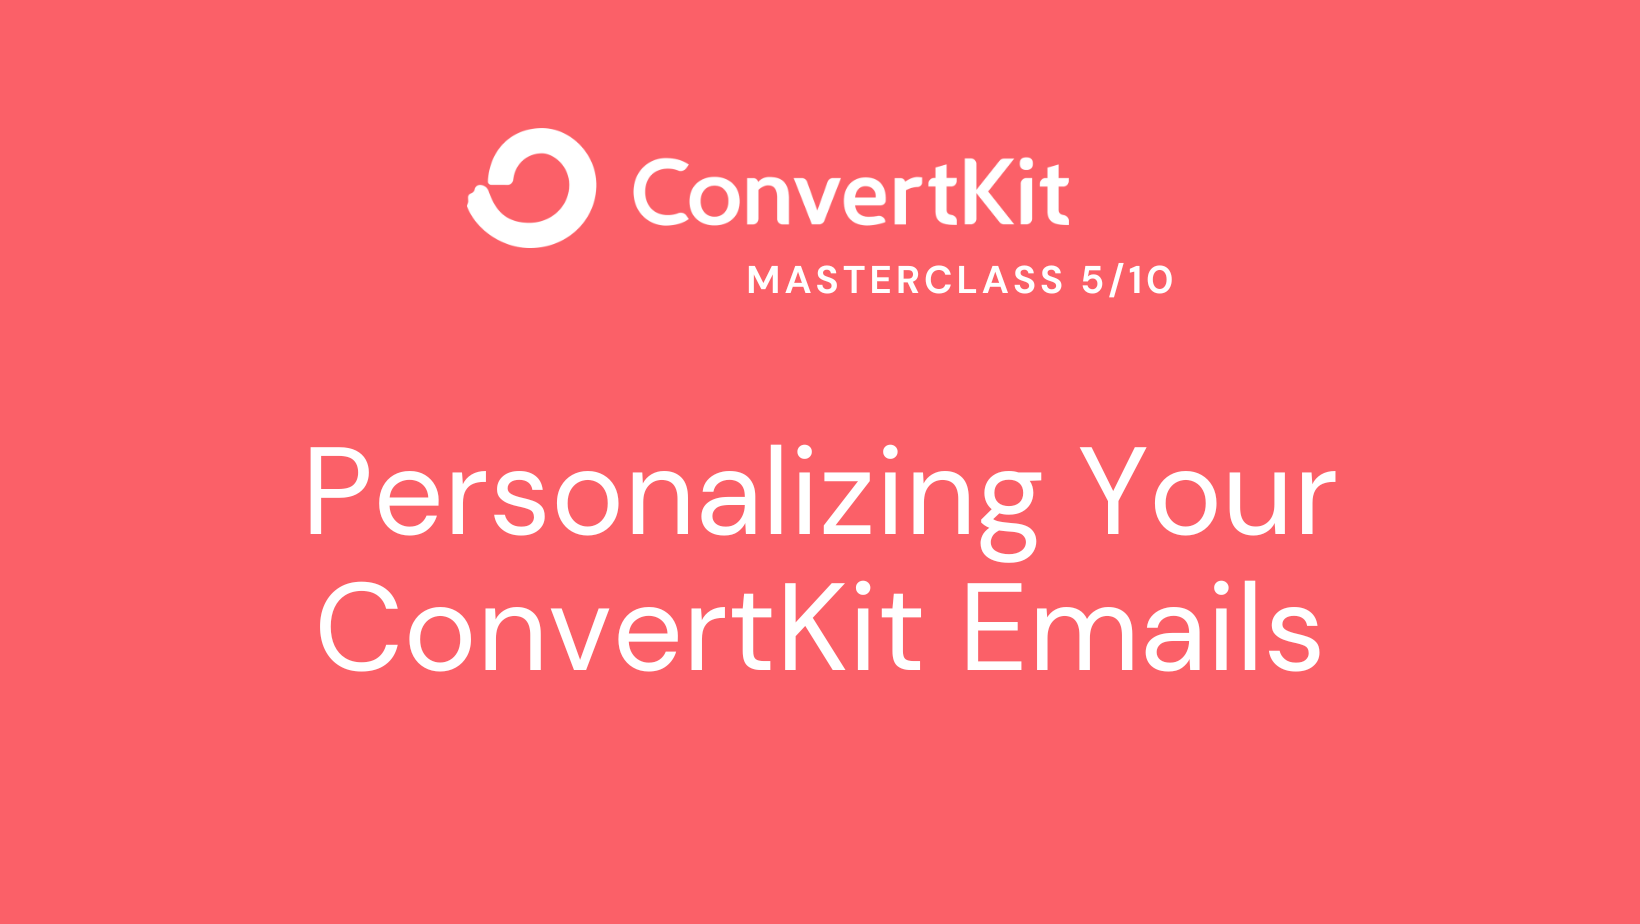 ConvertKit Masterclass 5/10 Personalizing Your ConvertKit Emails